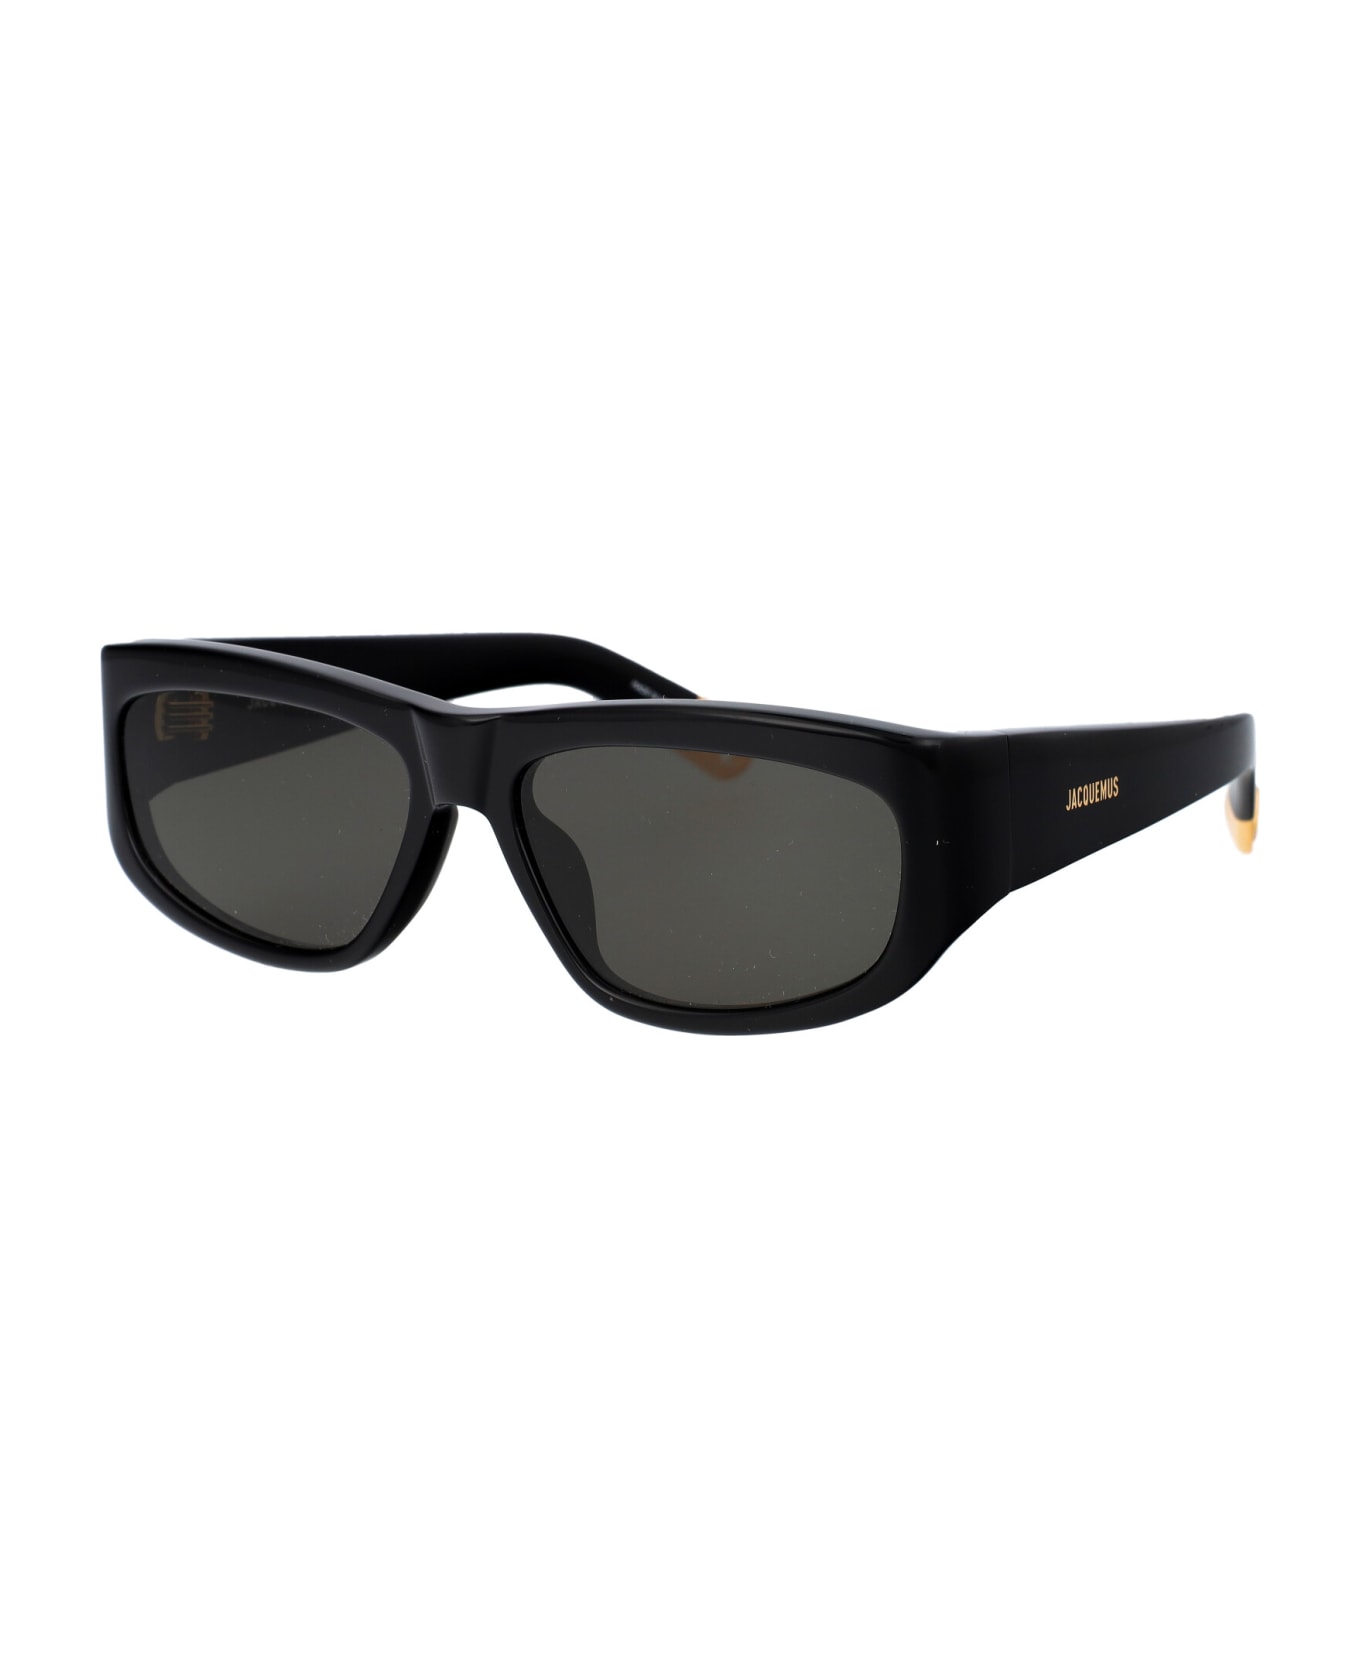 Jacquemus Pilota Sunglasses - 01 BLACK/ YELLOW GOLD/ GREY